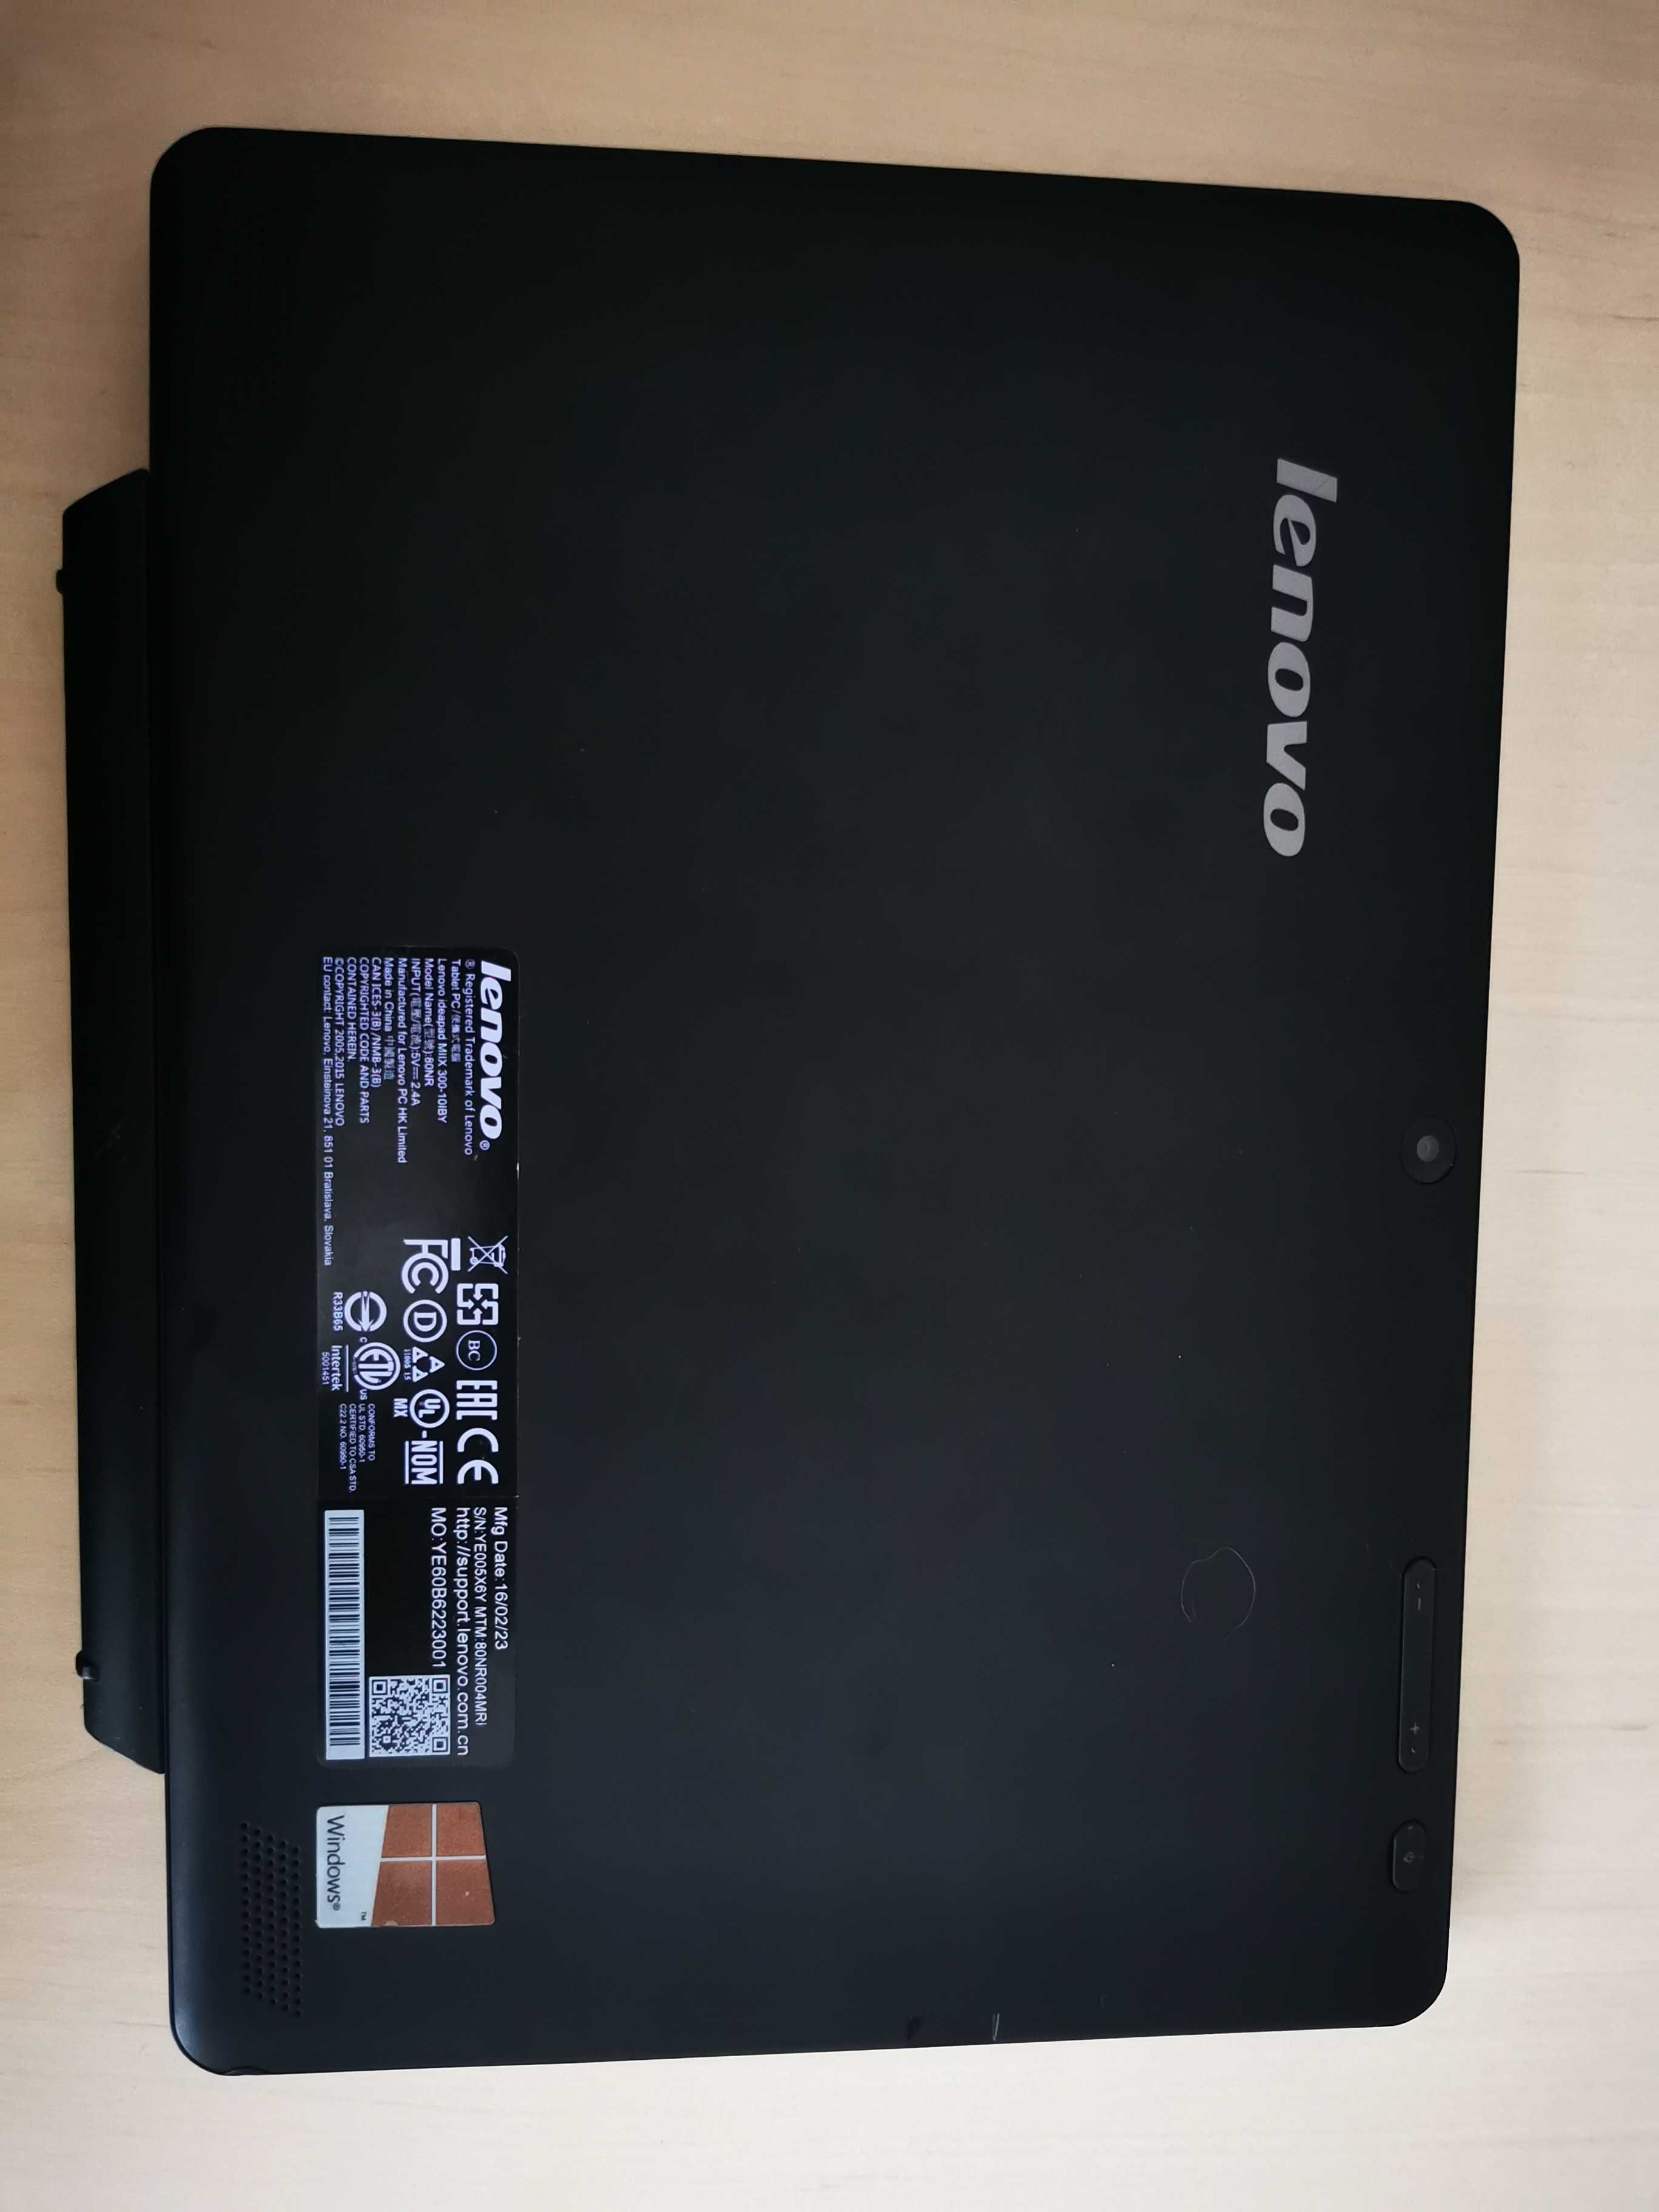 Lenovo ideapad 2 IN 1  miix 300-10iby Windows 10 Home edition